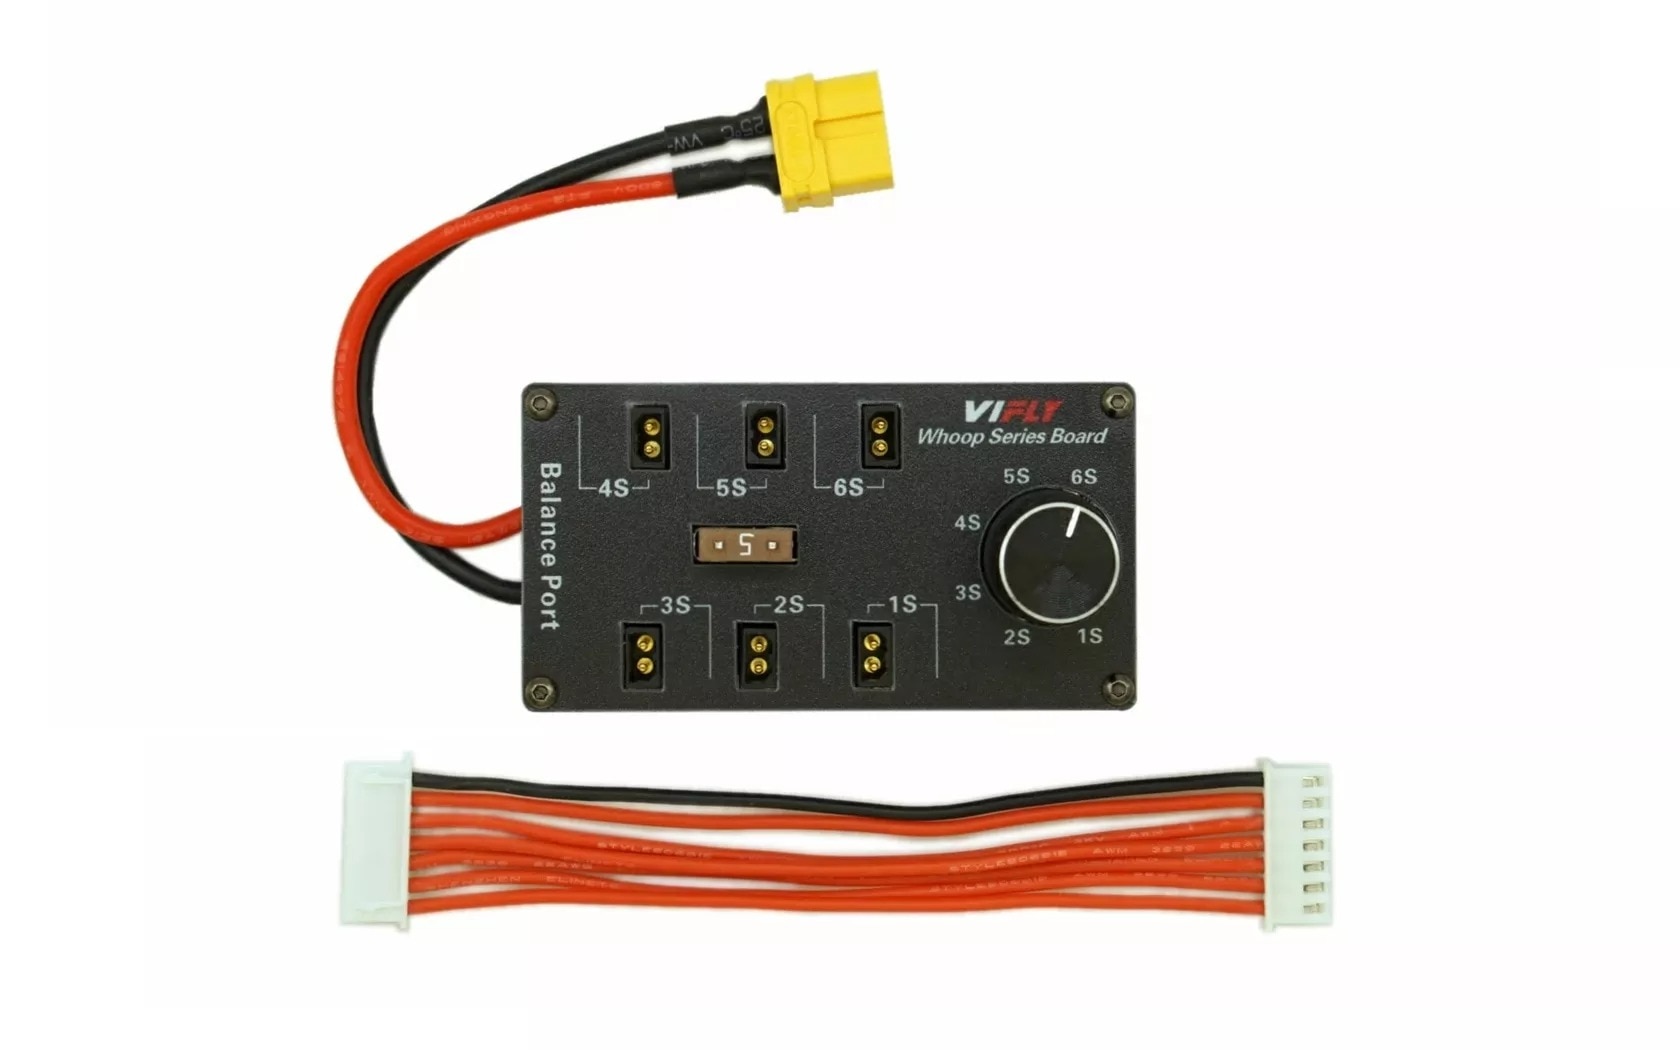 VIFLY Whoop シリーズボードバランス充電 6 ポート 1S LIPO バッテリー